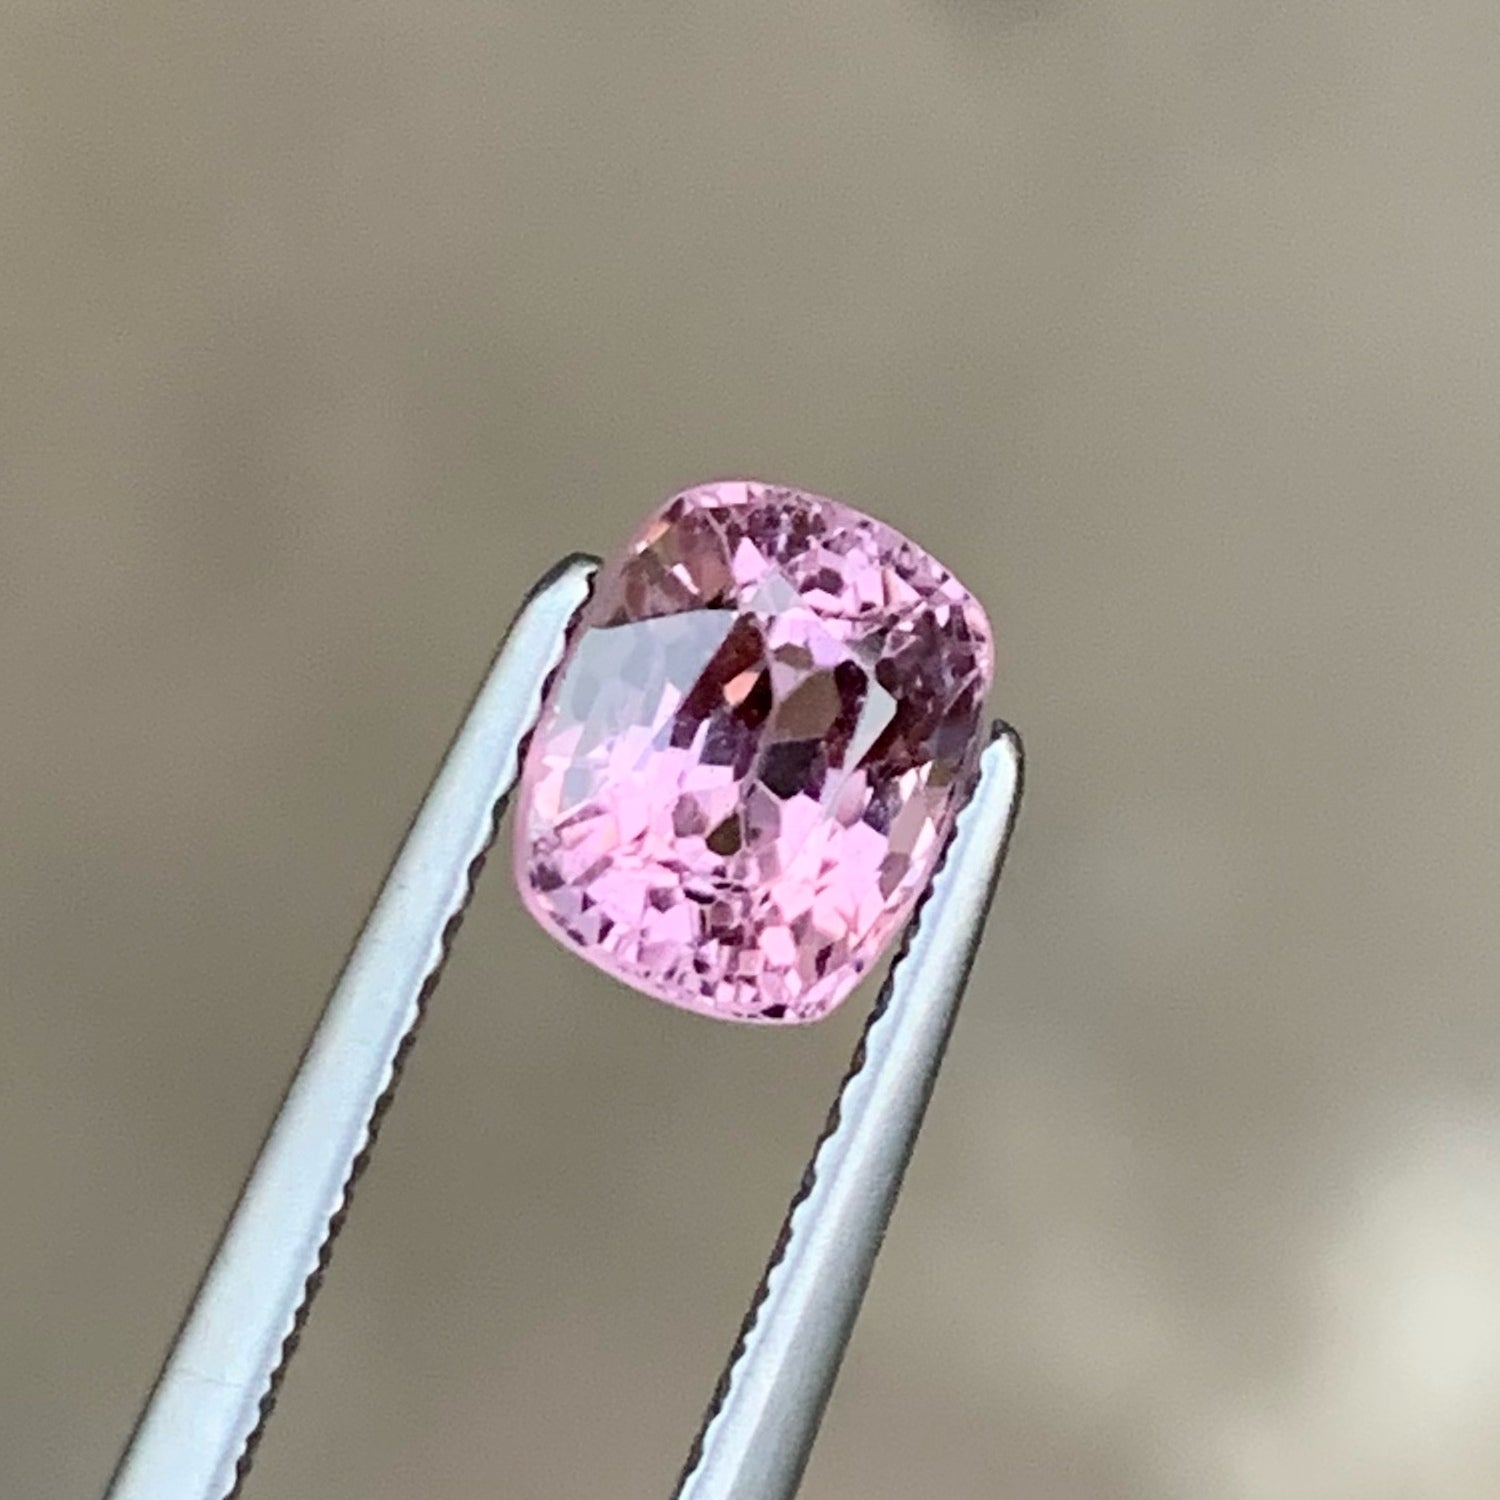 Fantastic Purplish Pink Natural Spinel Stone